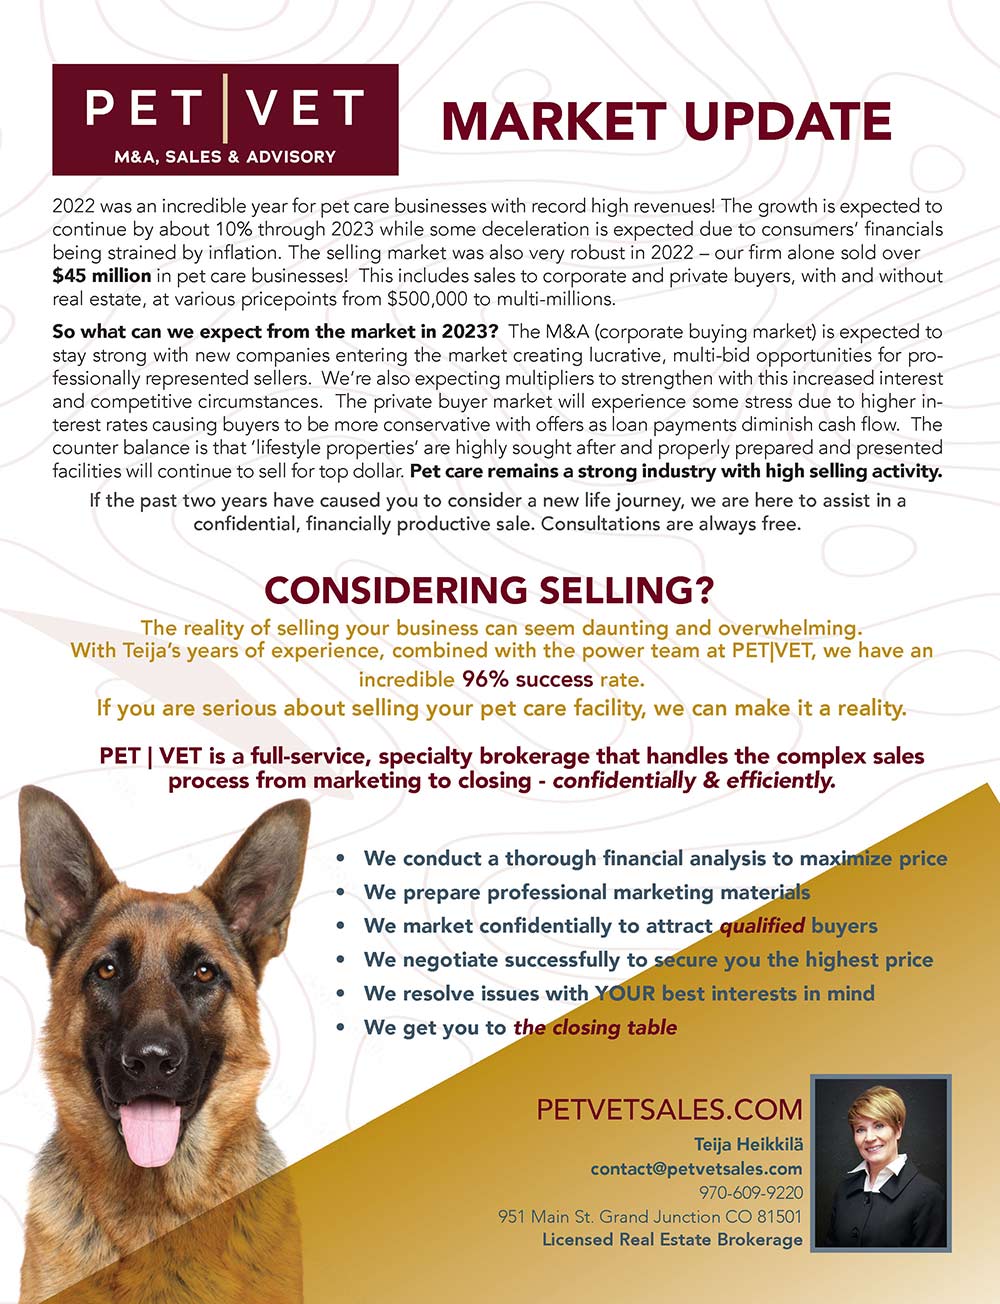 Pet | Vet M&A, Sales & Advisory Advertisement